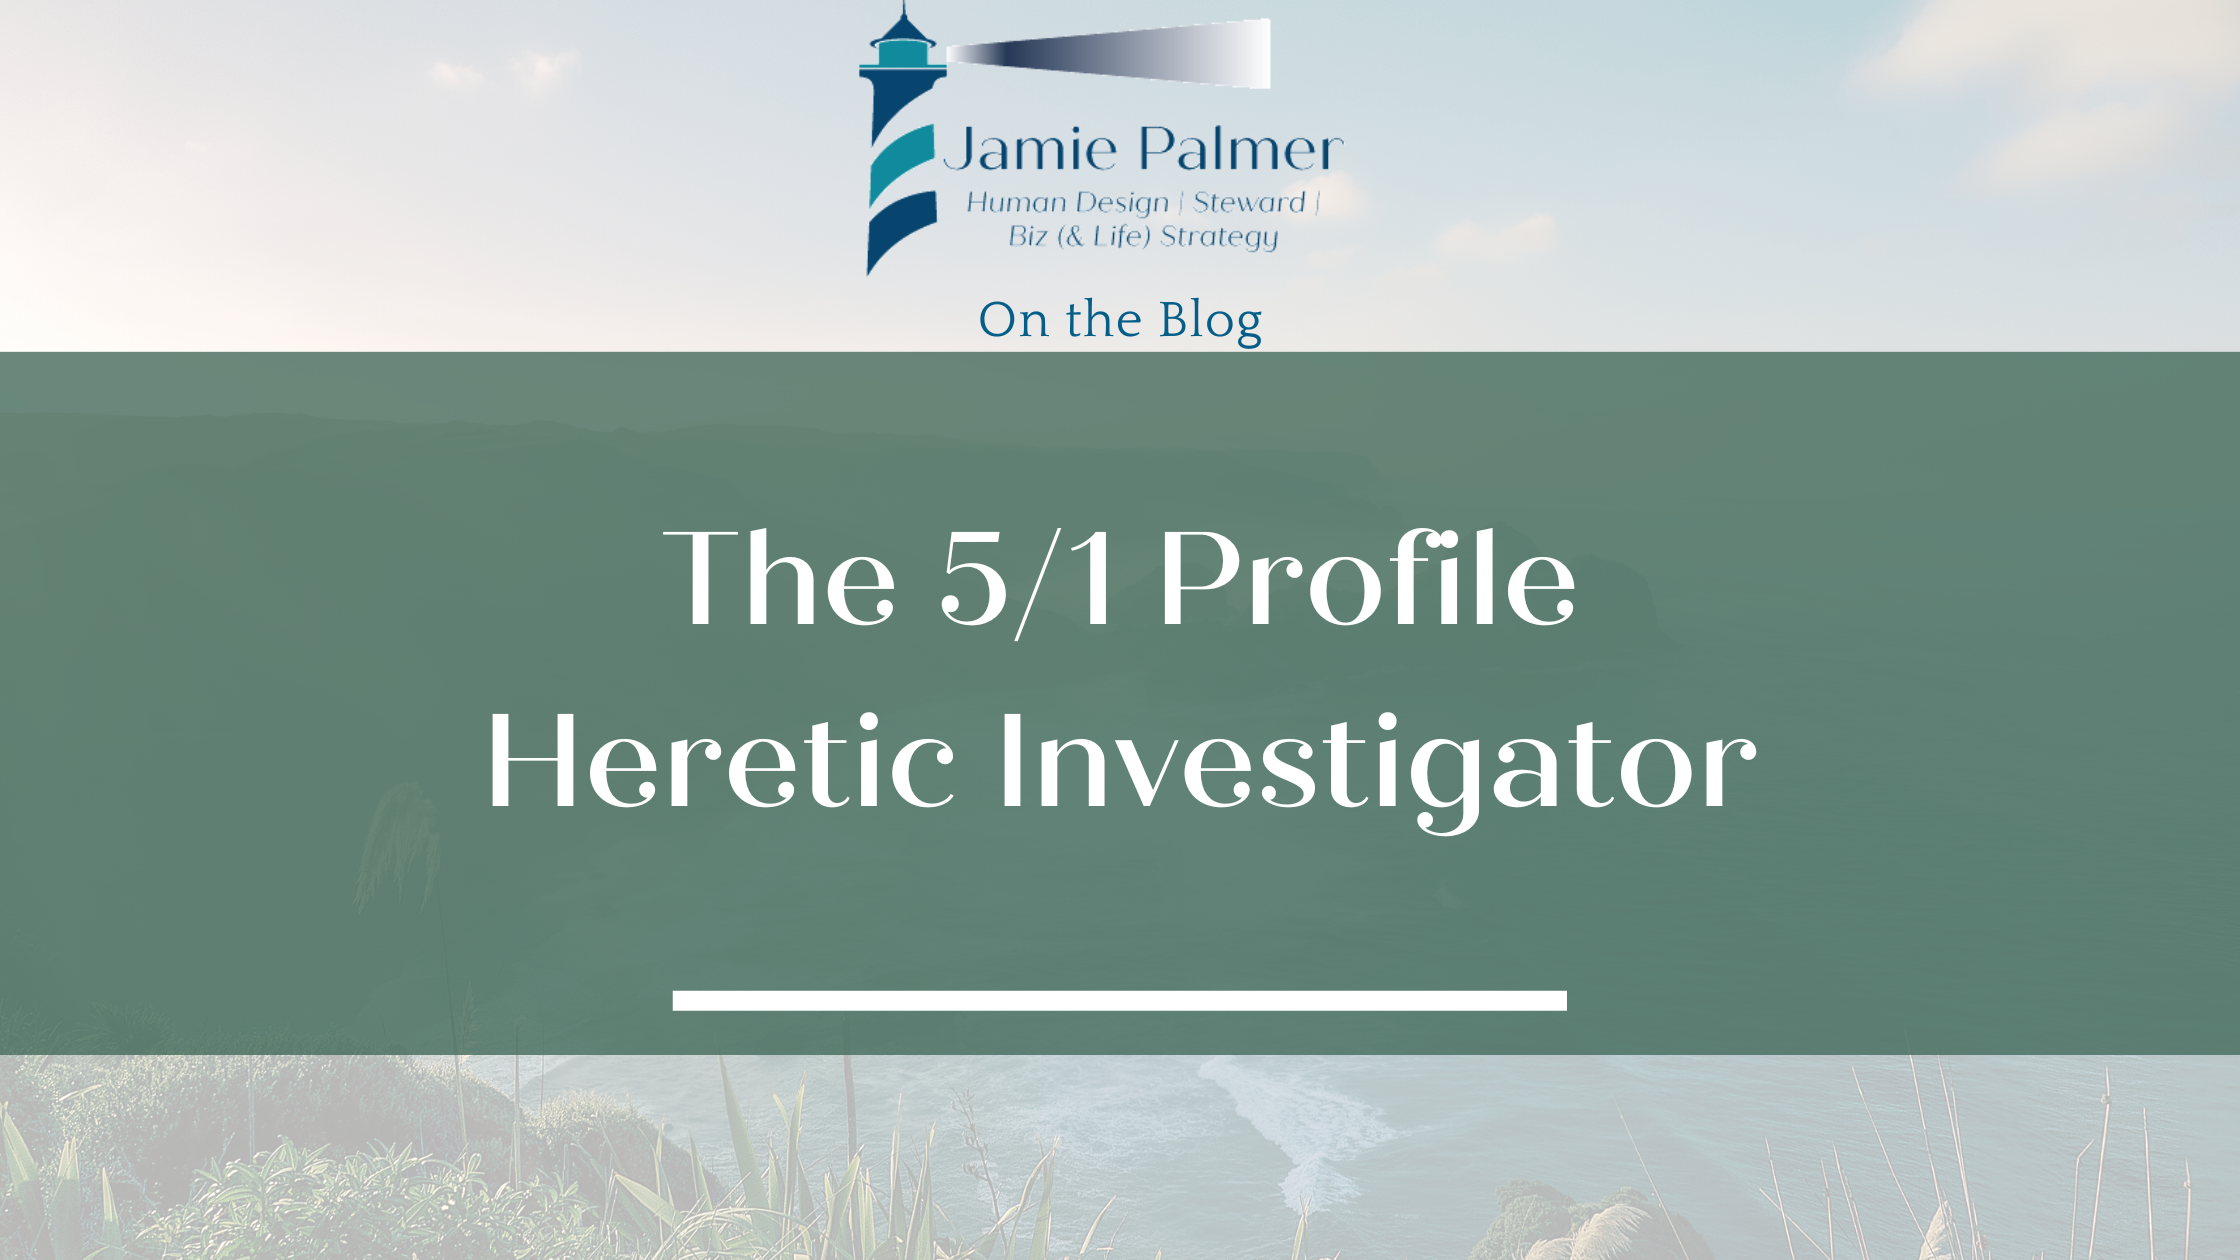 5/1 heretic investigator profile in human design